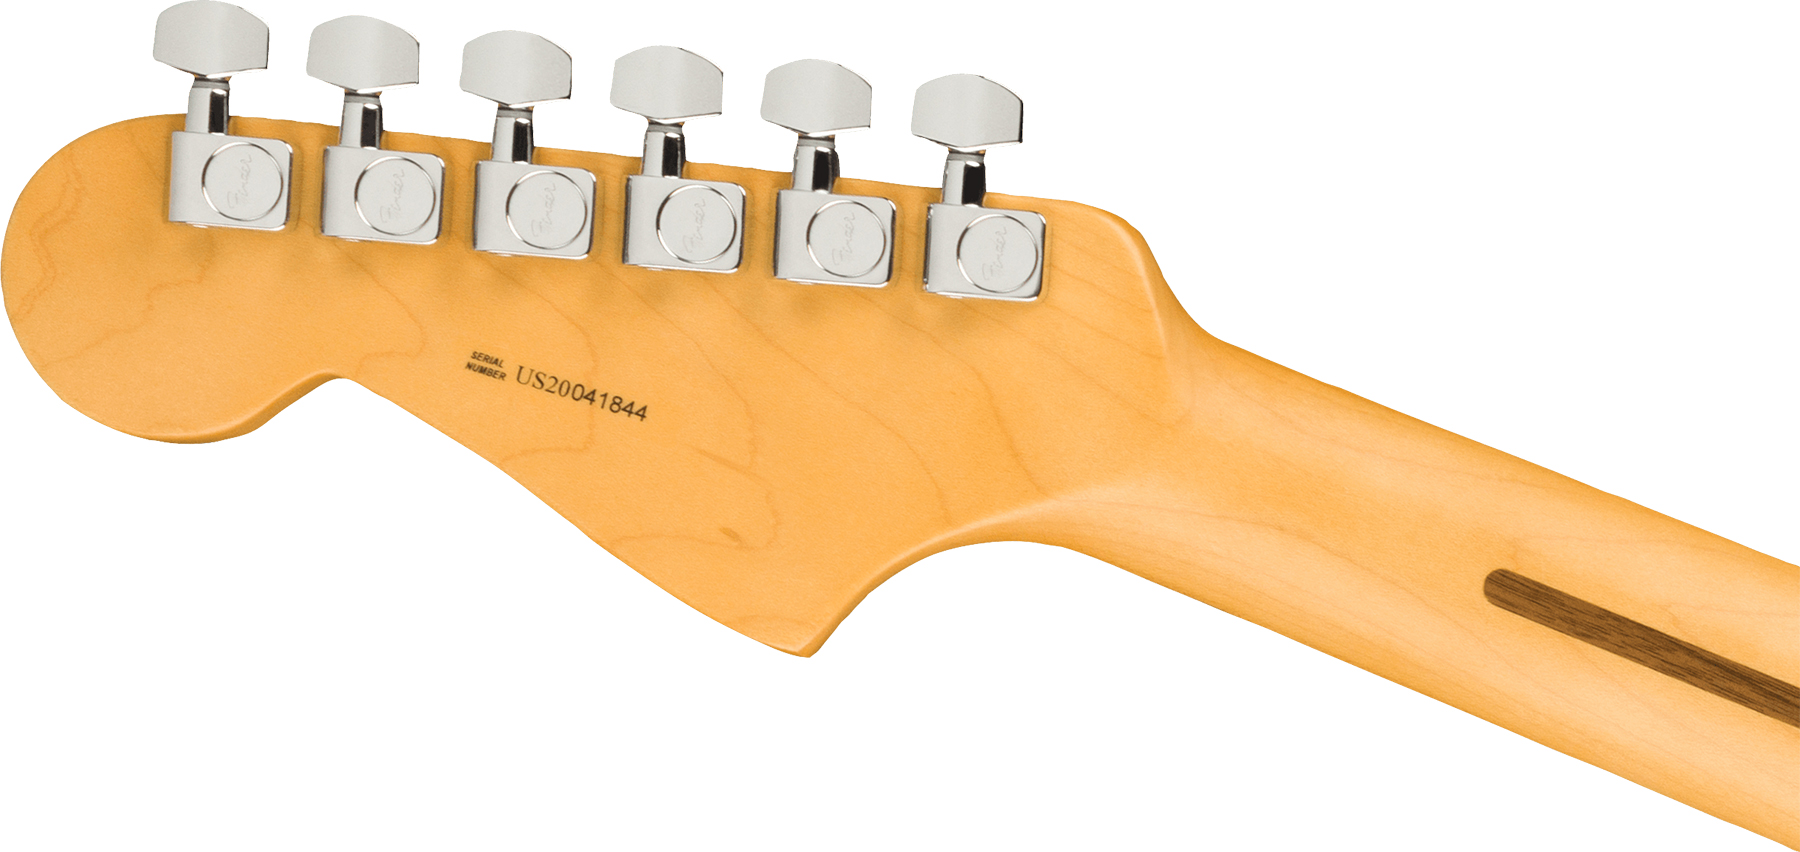 Fender Jazzmaster American Professional Ii Lh Gaucher Usa Rw - 3-color Sunburst - Left-handed electric guitar - Variation 3